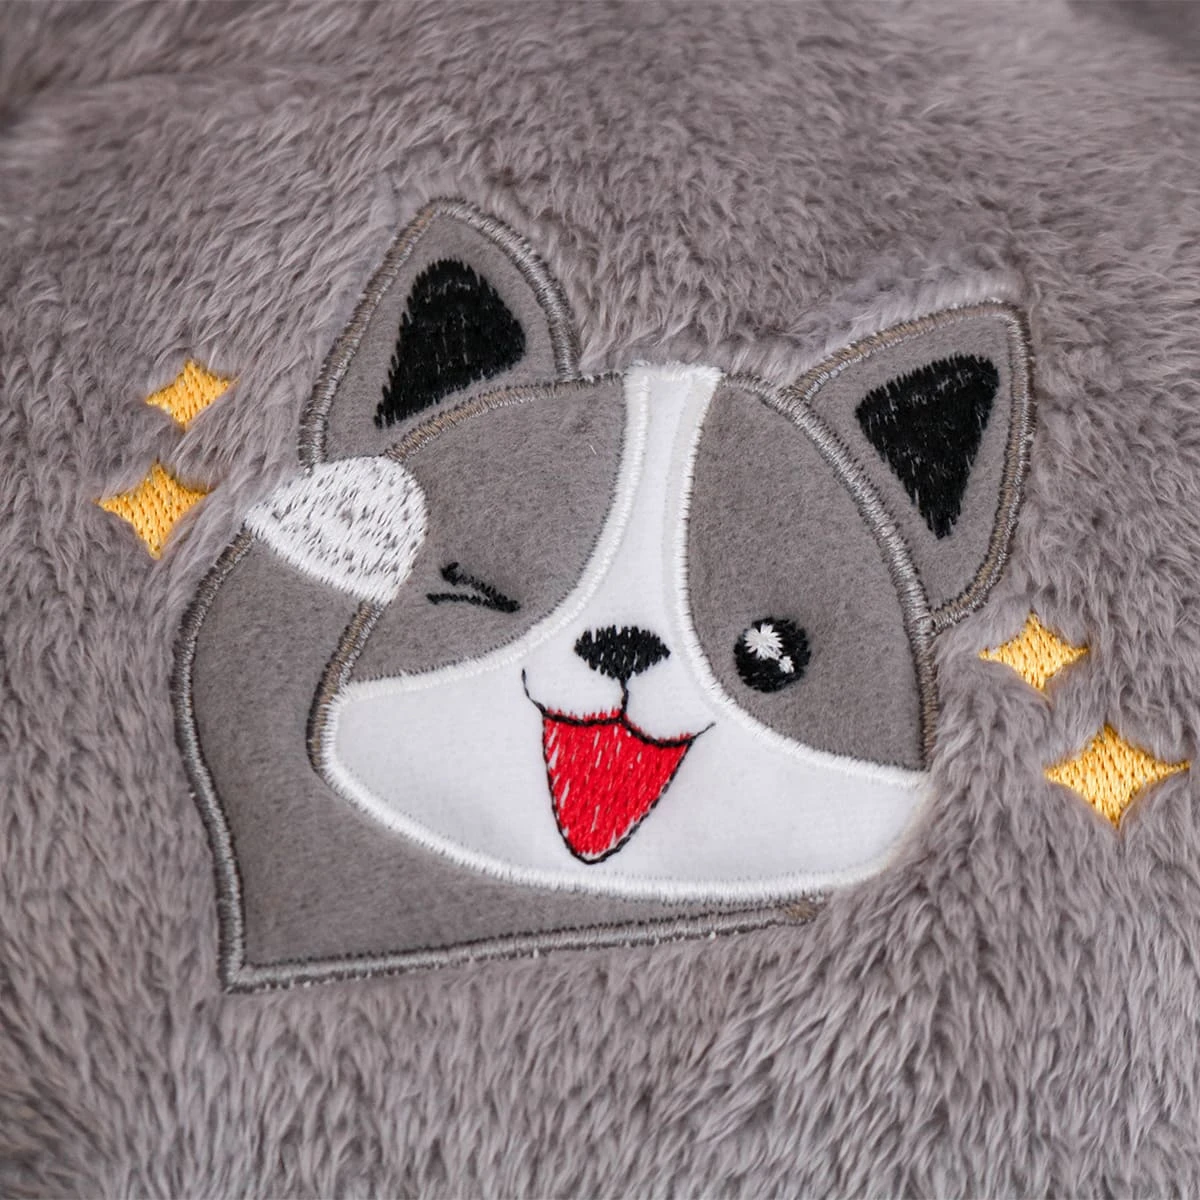 M Embroidery Reversible Plush Pet Mat (Grey)